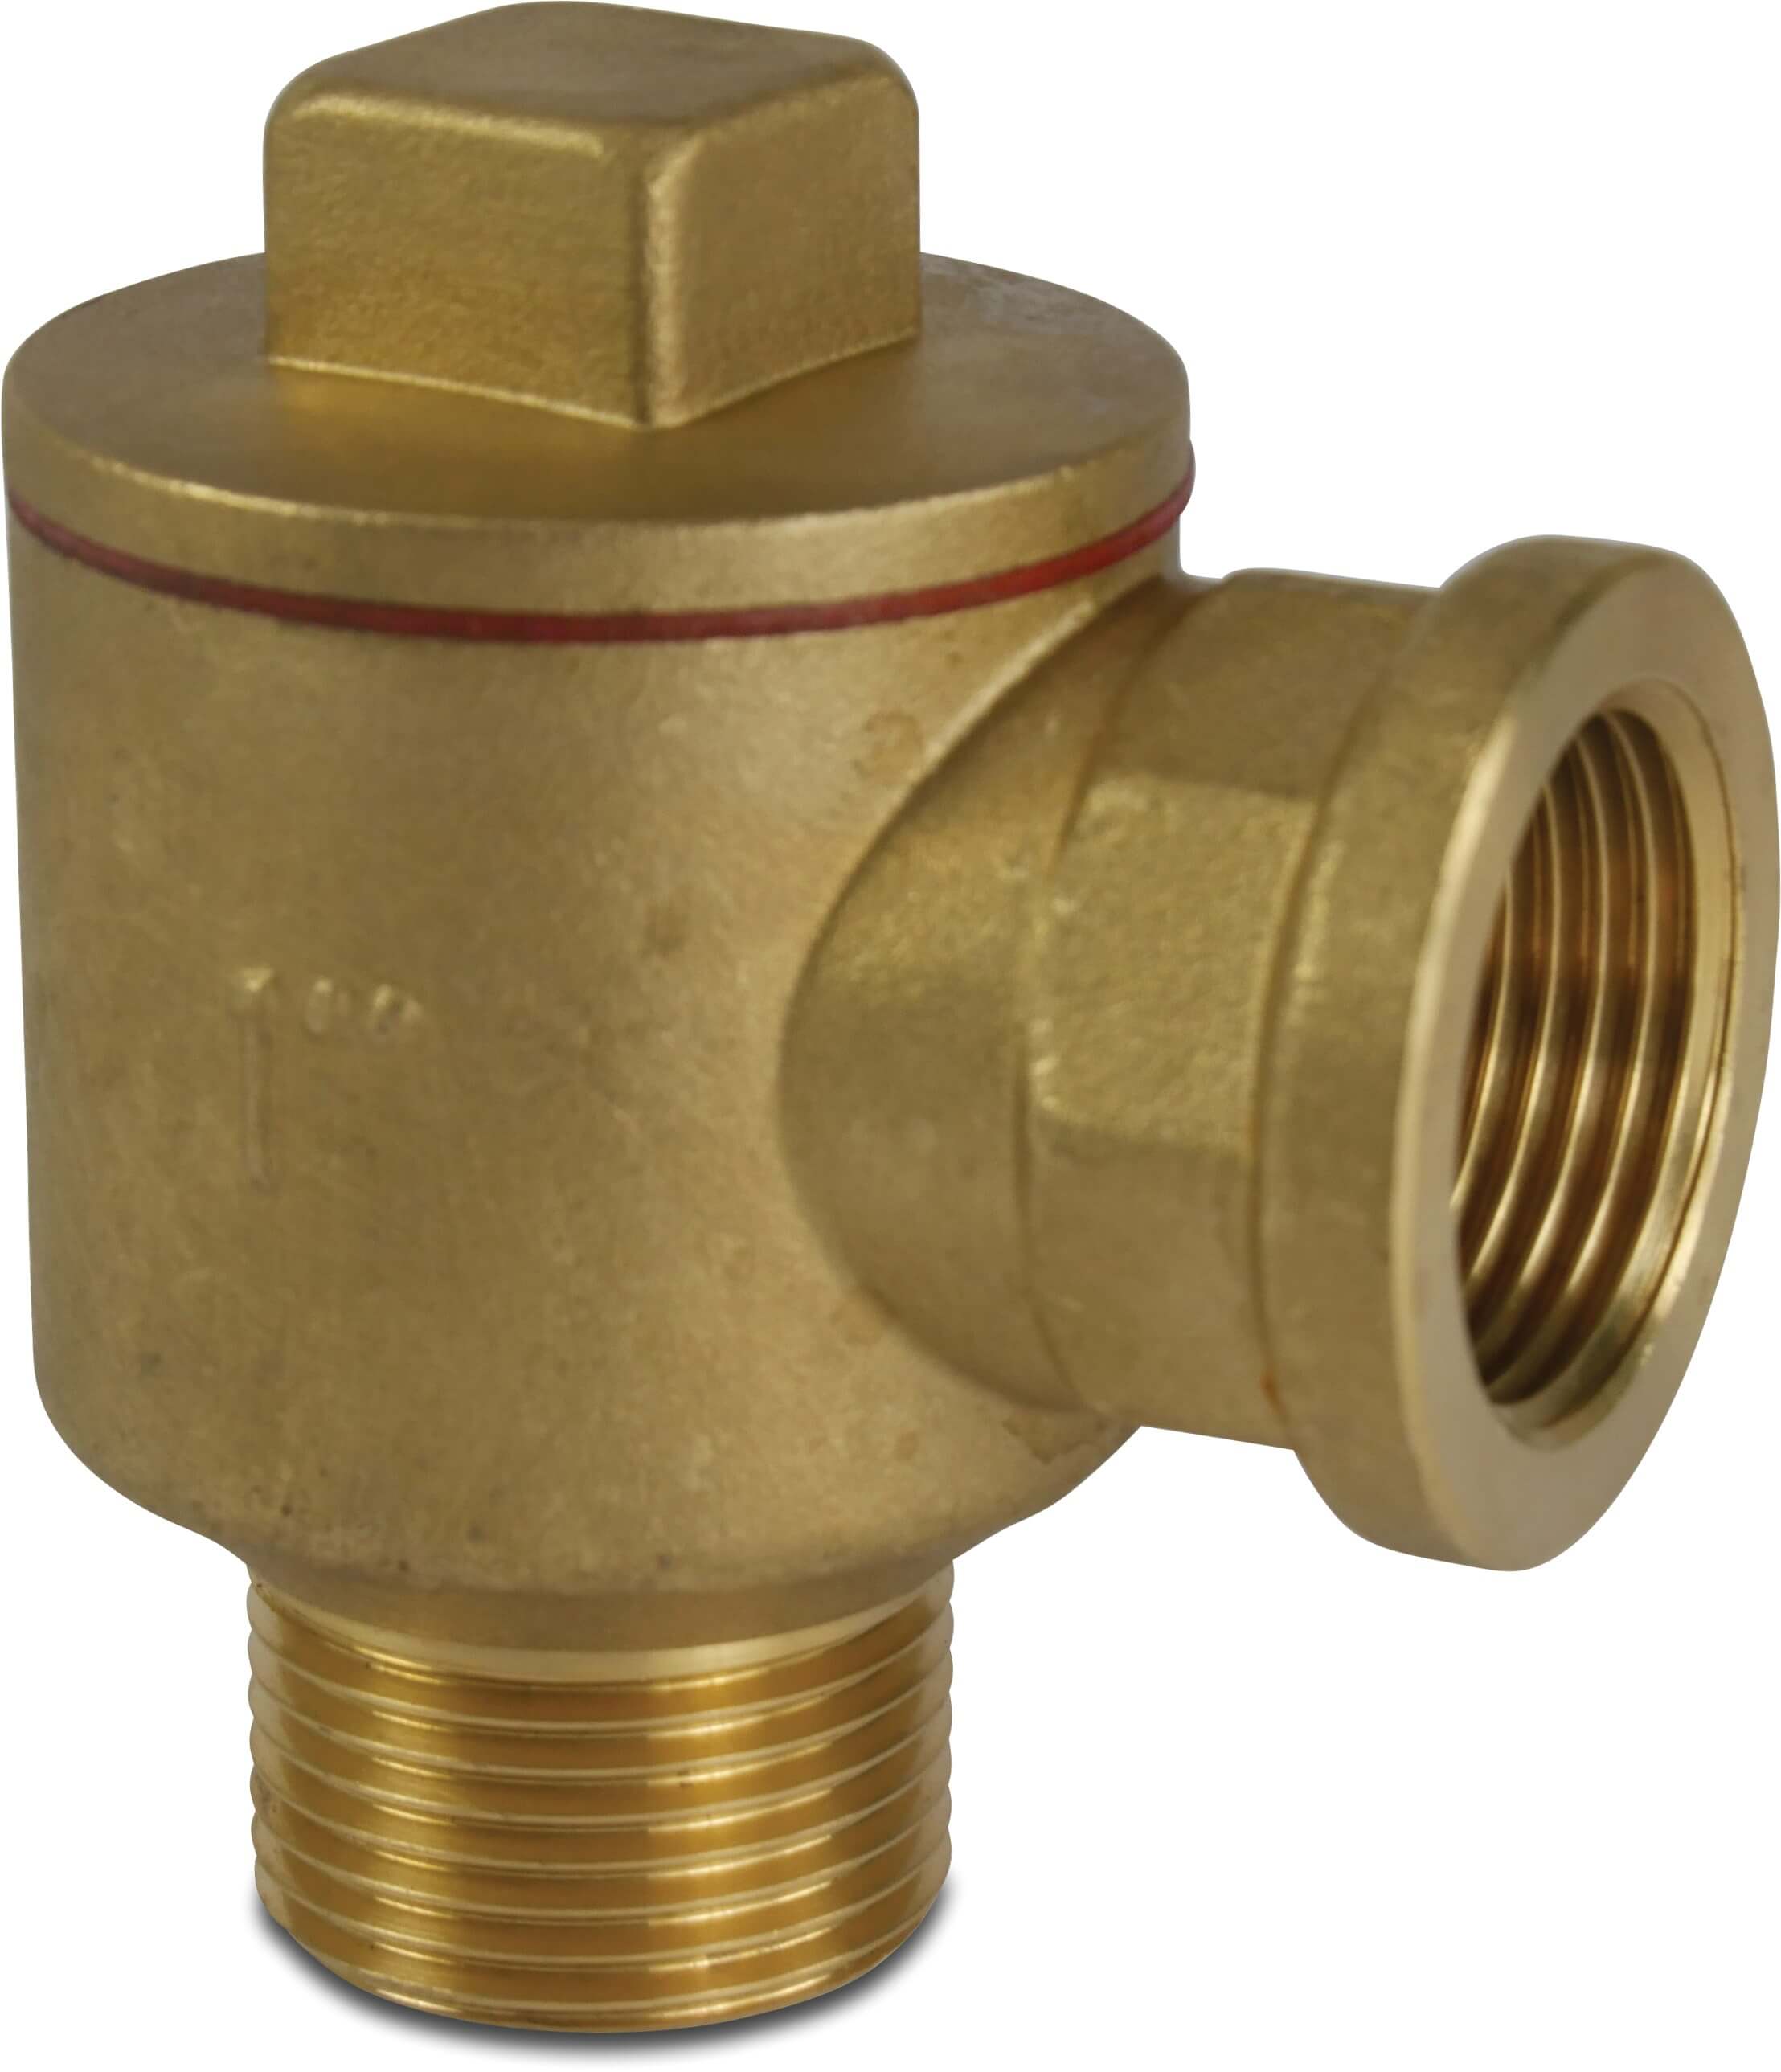 Non return valve brass 1" female thread x male thread 10bar type 427